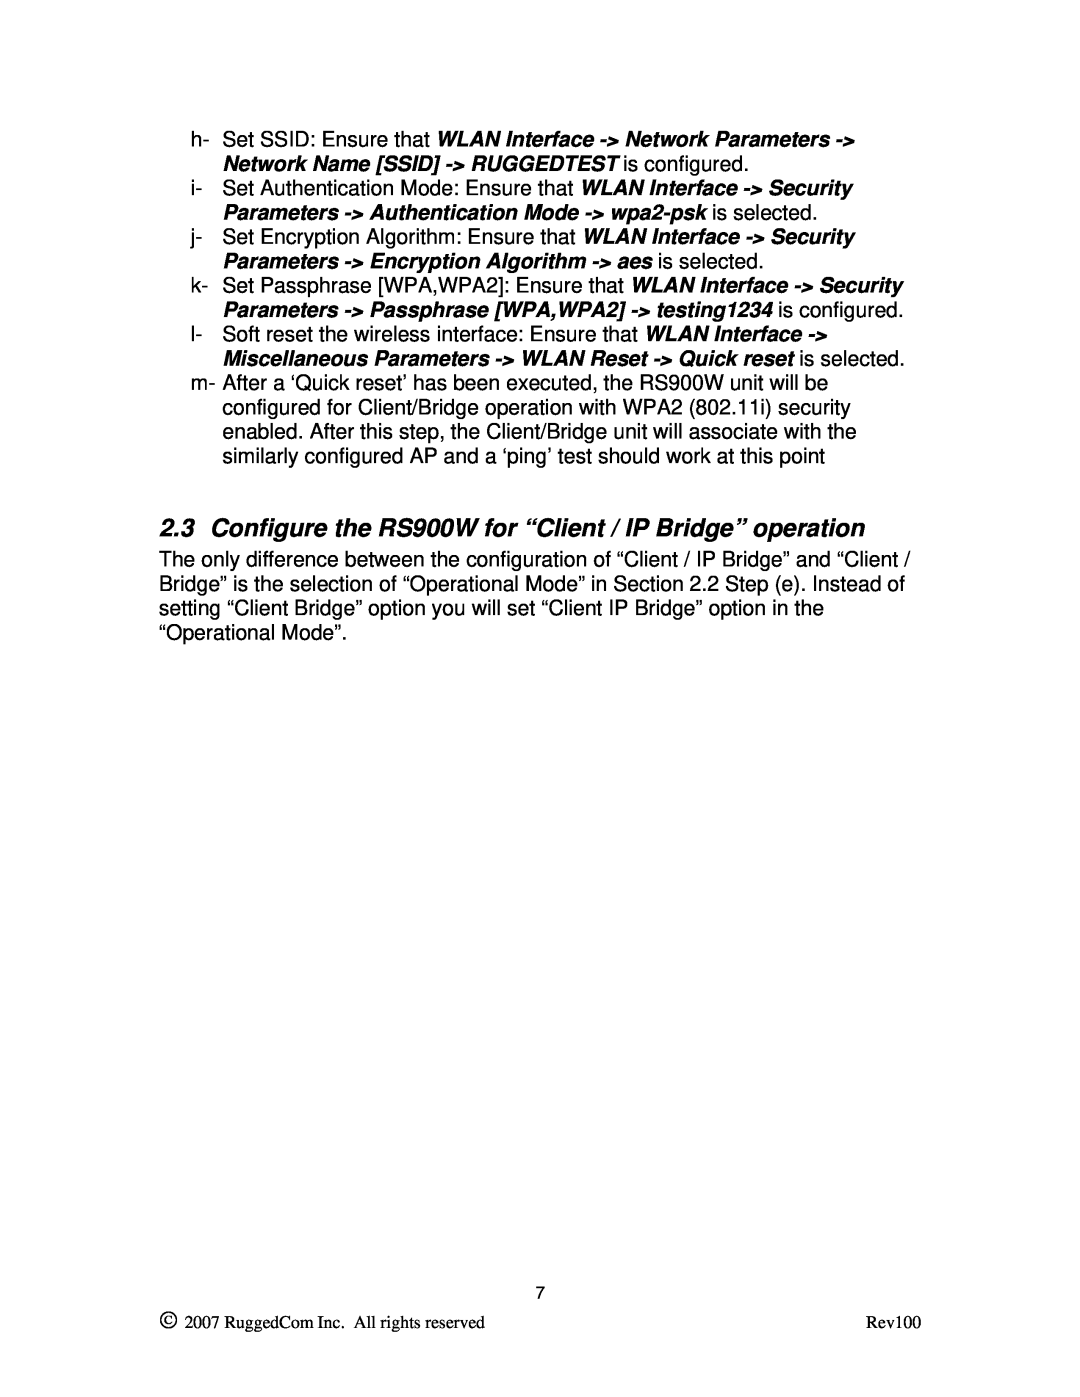 RuggedCom manual Configure the RS900W for “Client / IP Bridge” operation 